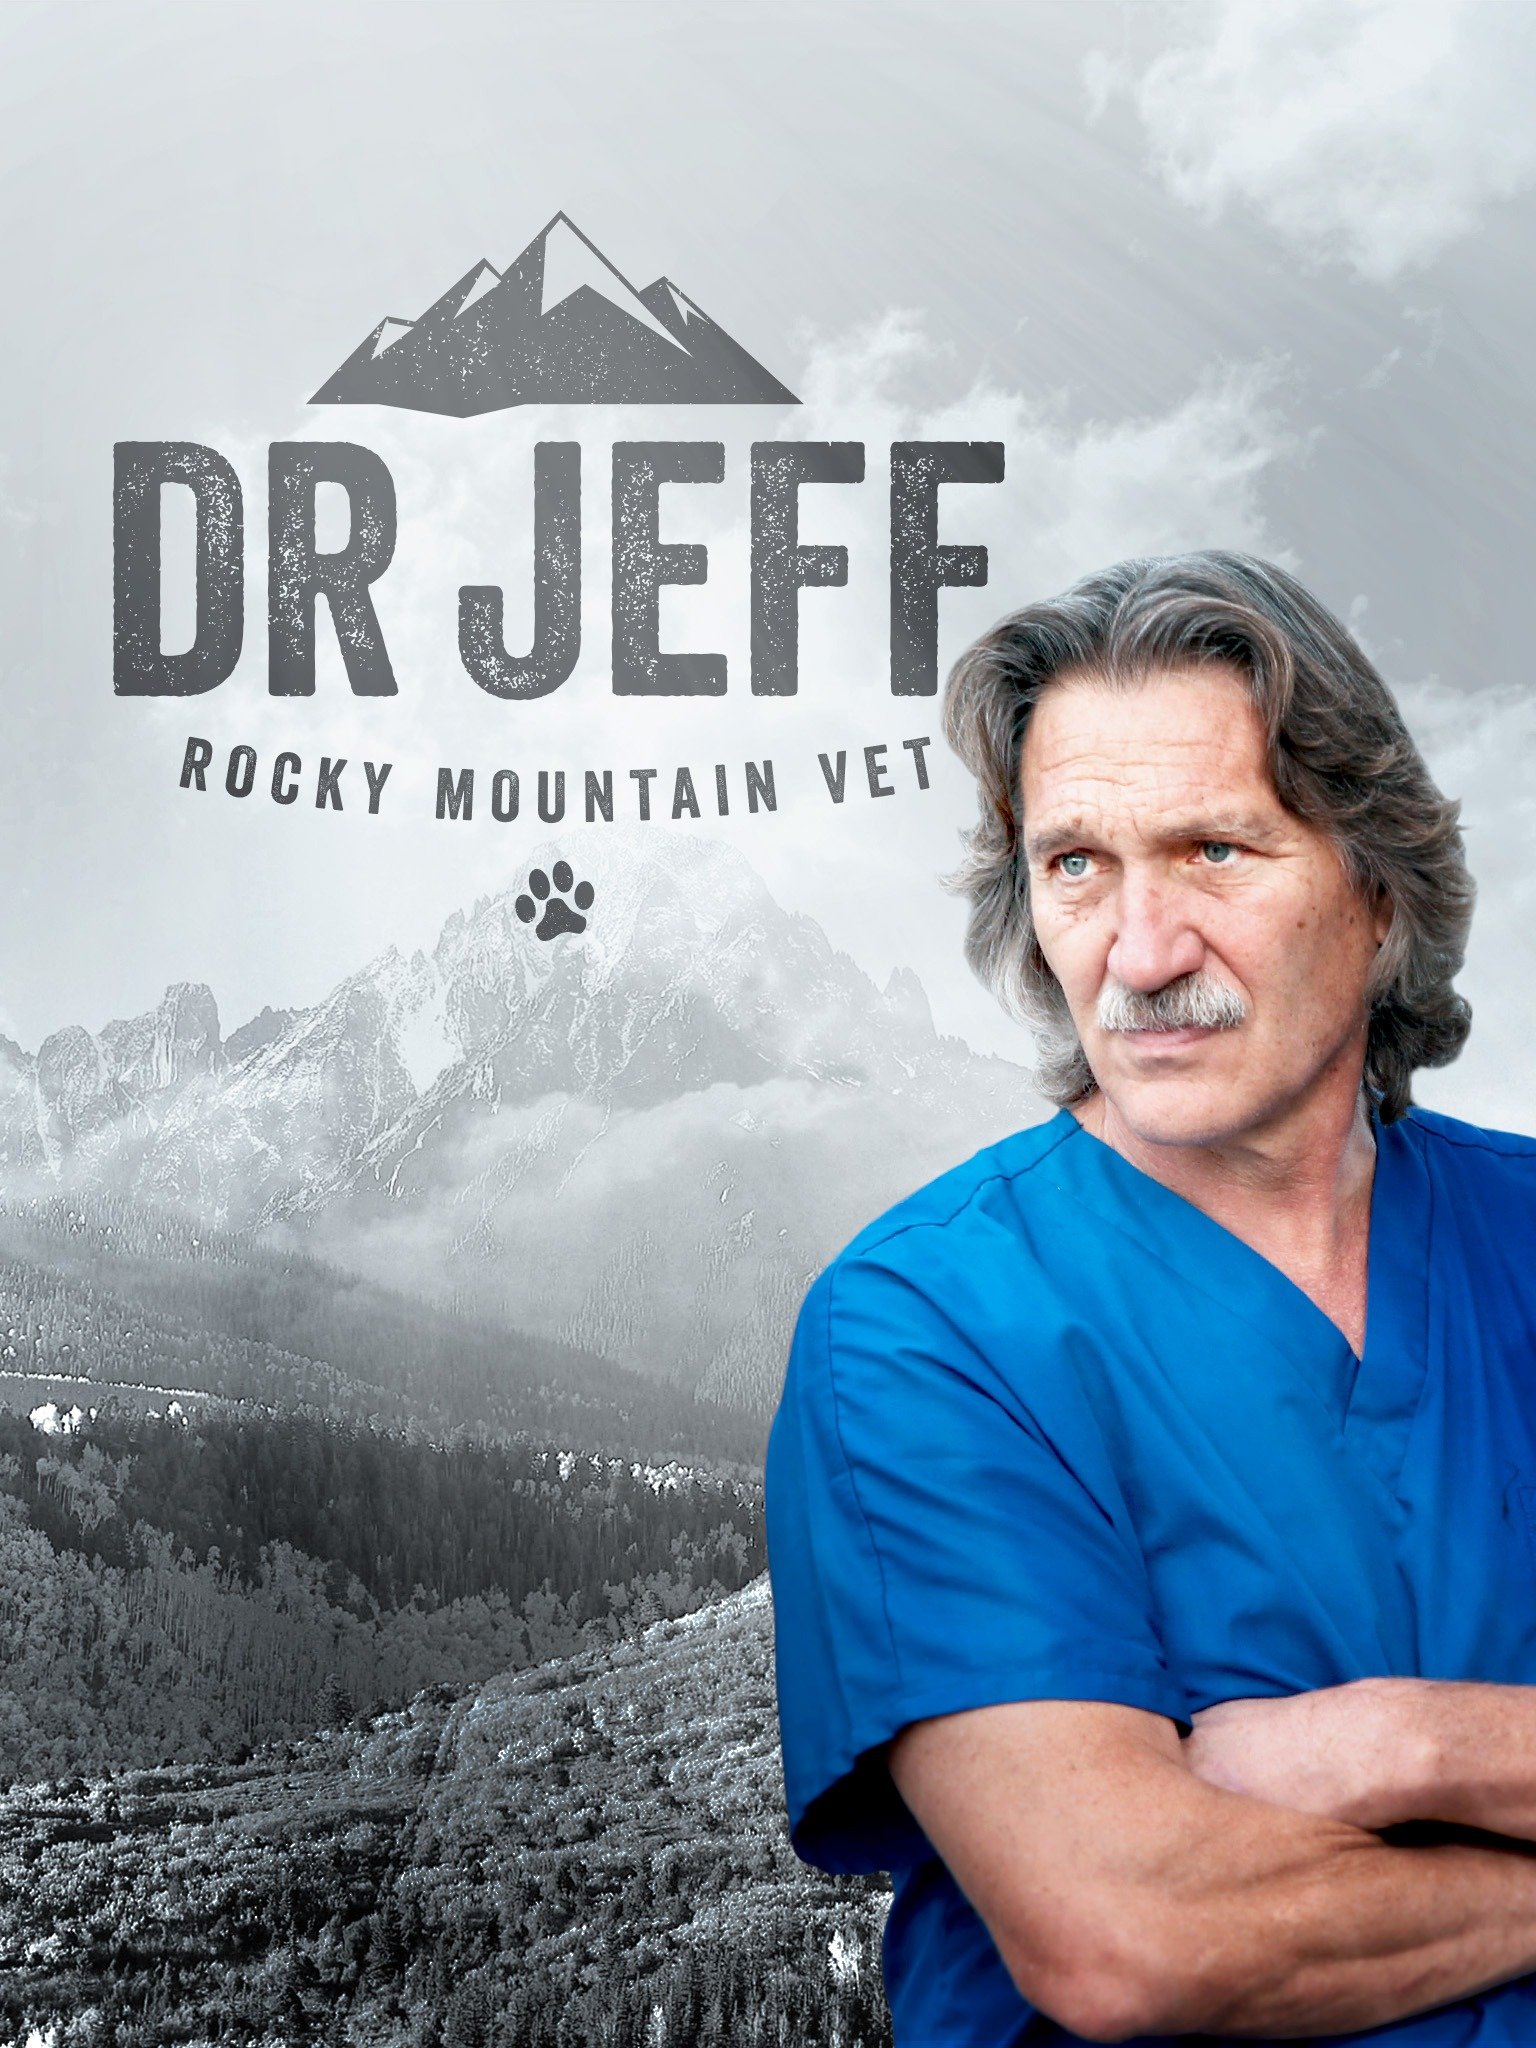 Dr. Jeff Rocky Mountain Vet Rotten Tomatoes